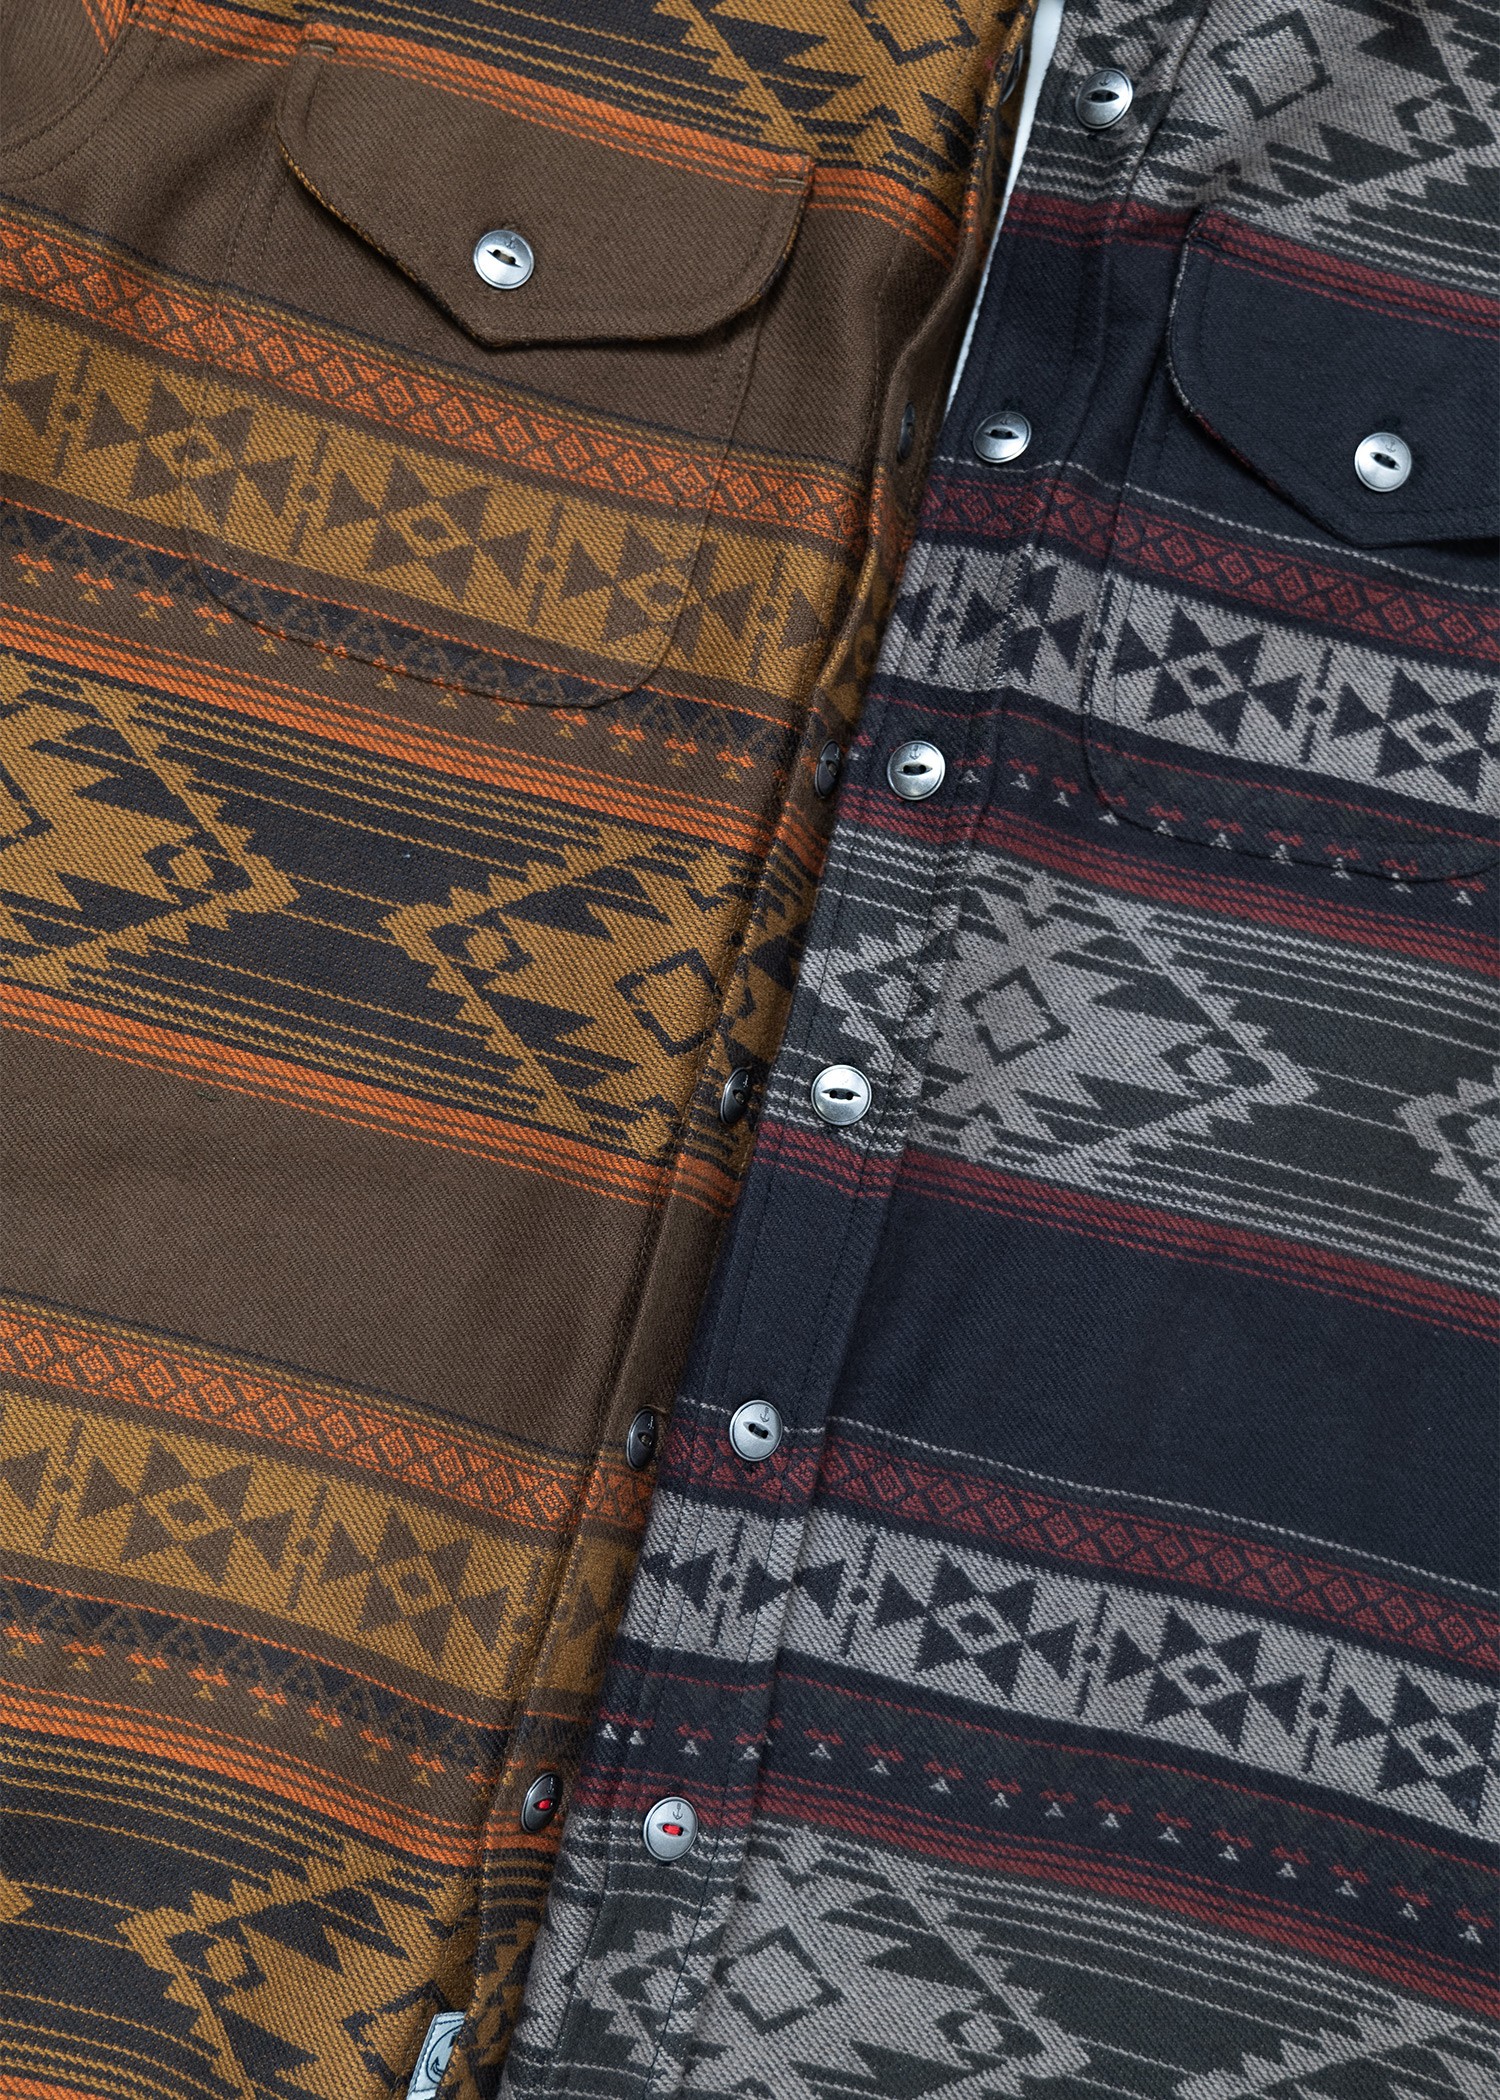 Taos - Chemise textile homme - 